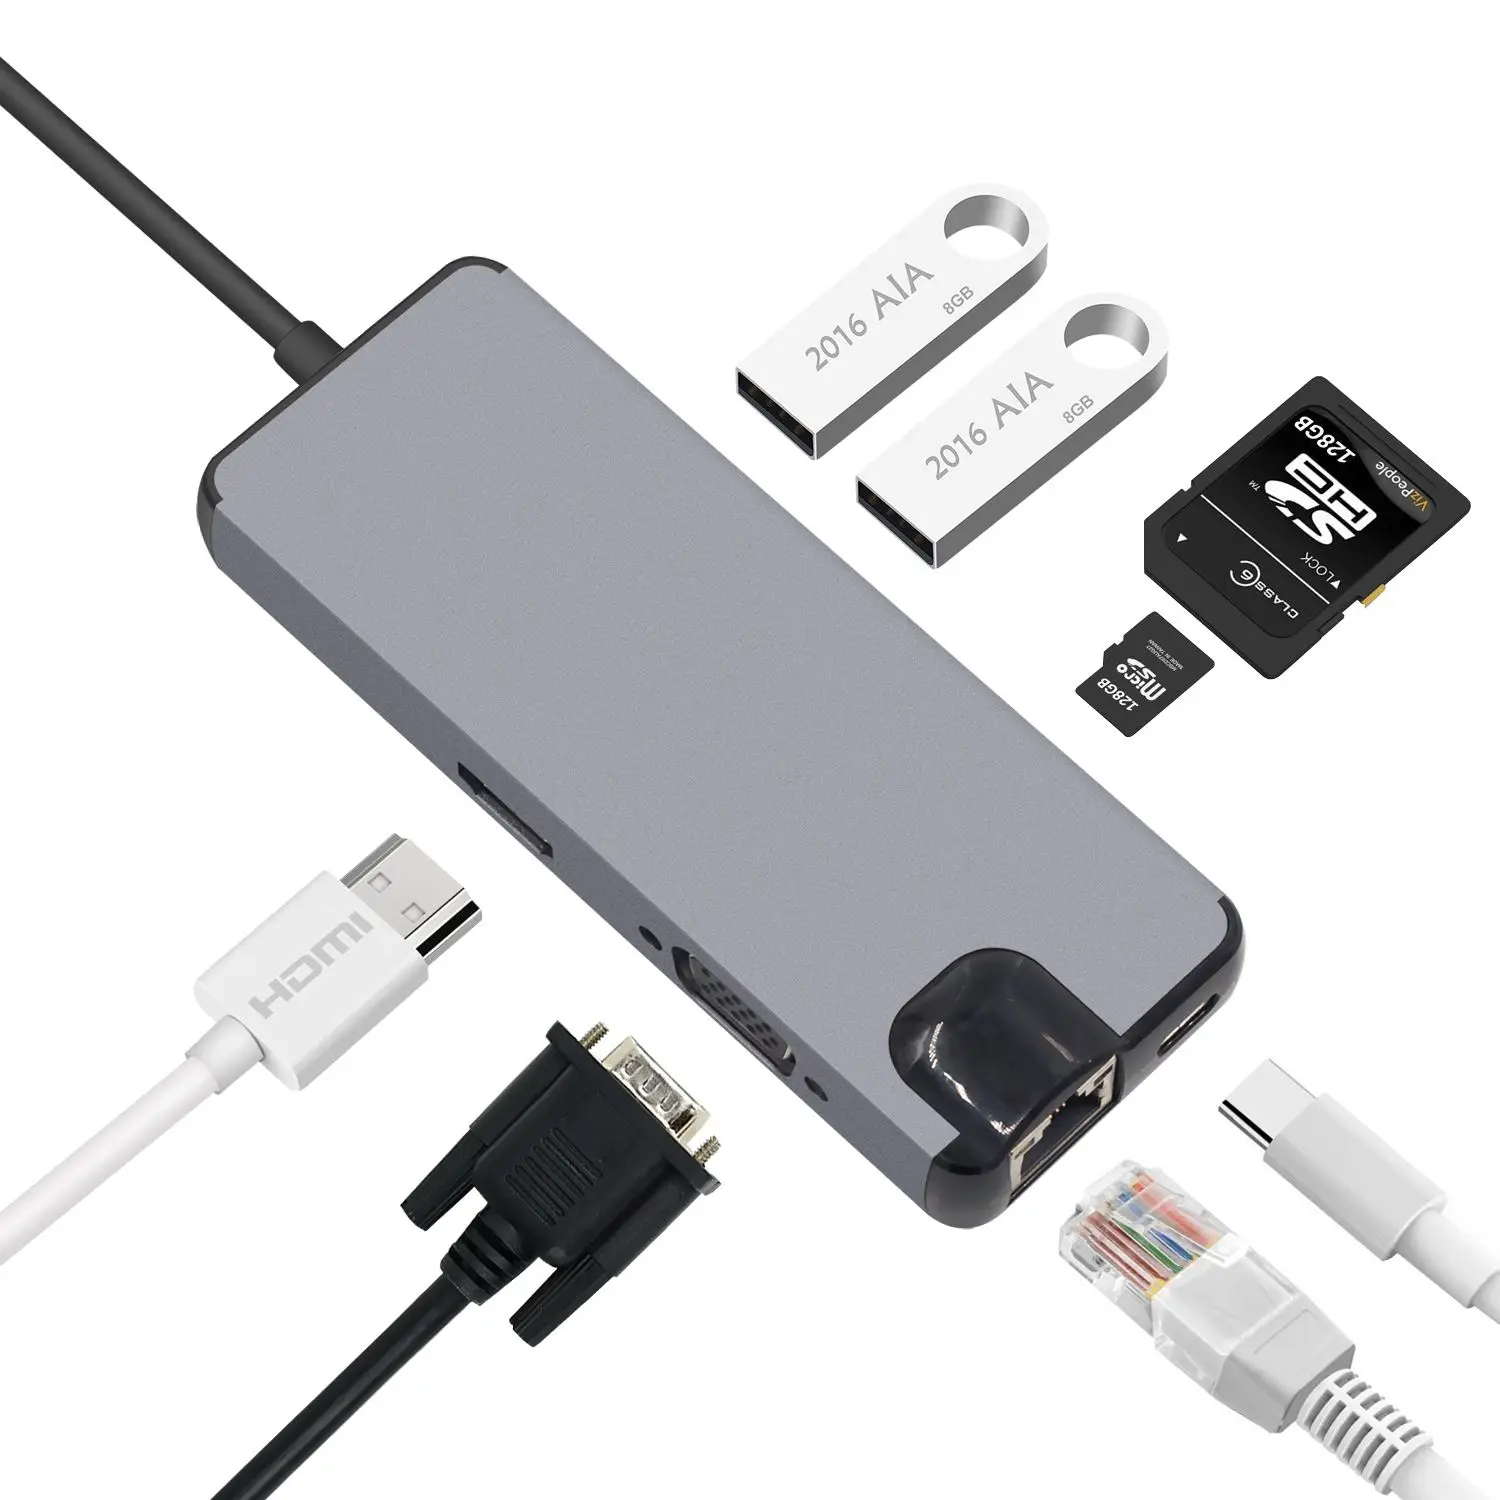 

8 портов USB C Hub HDMI VGA Ethernet Lan RJ45 адаптер для Mac book Pro, Type C хаб кардридер 2 USB 3,0 + Type-C зарядный порт